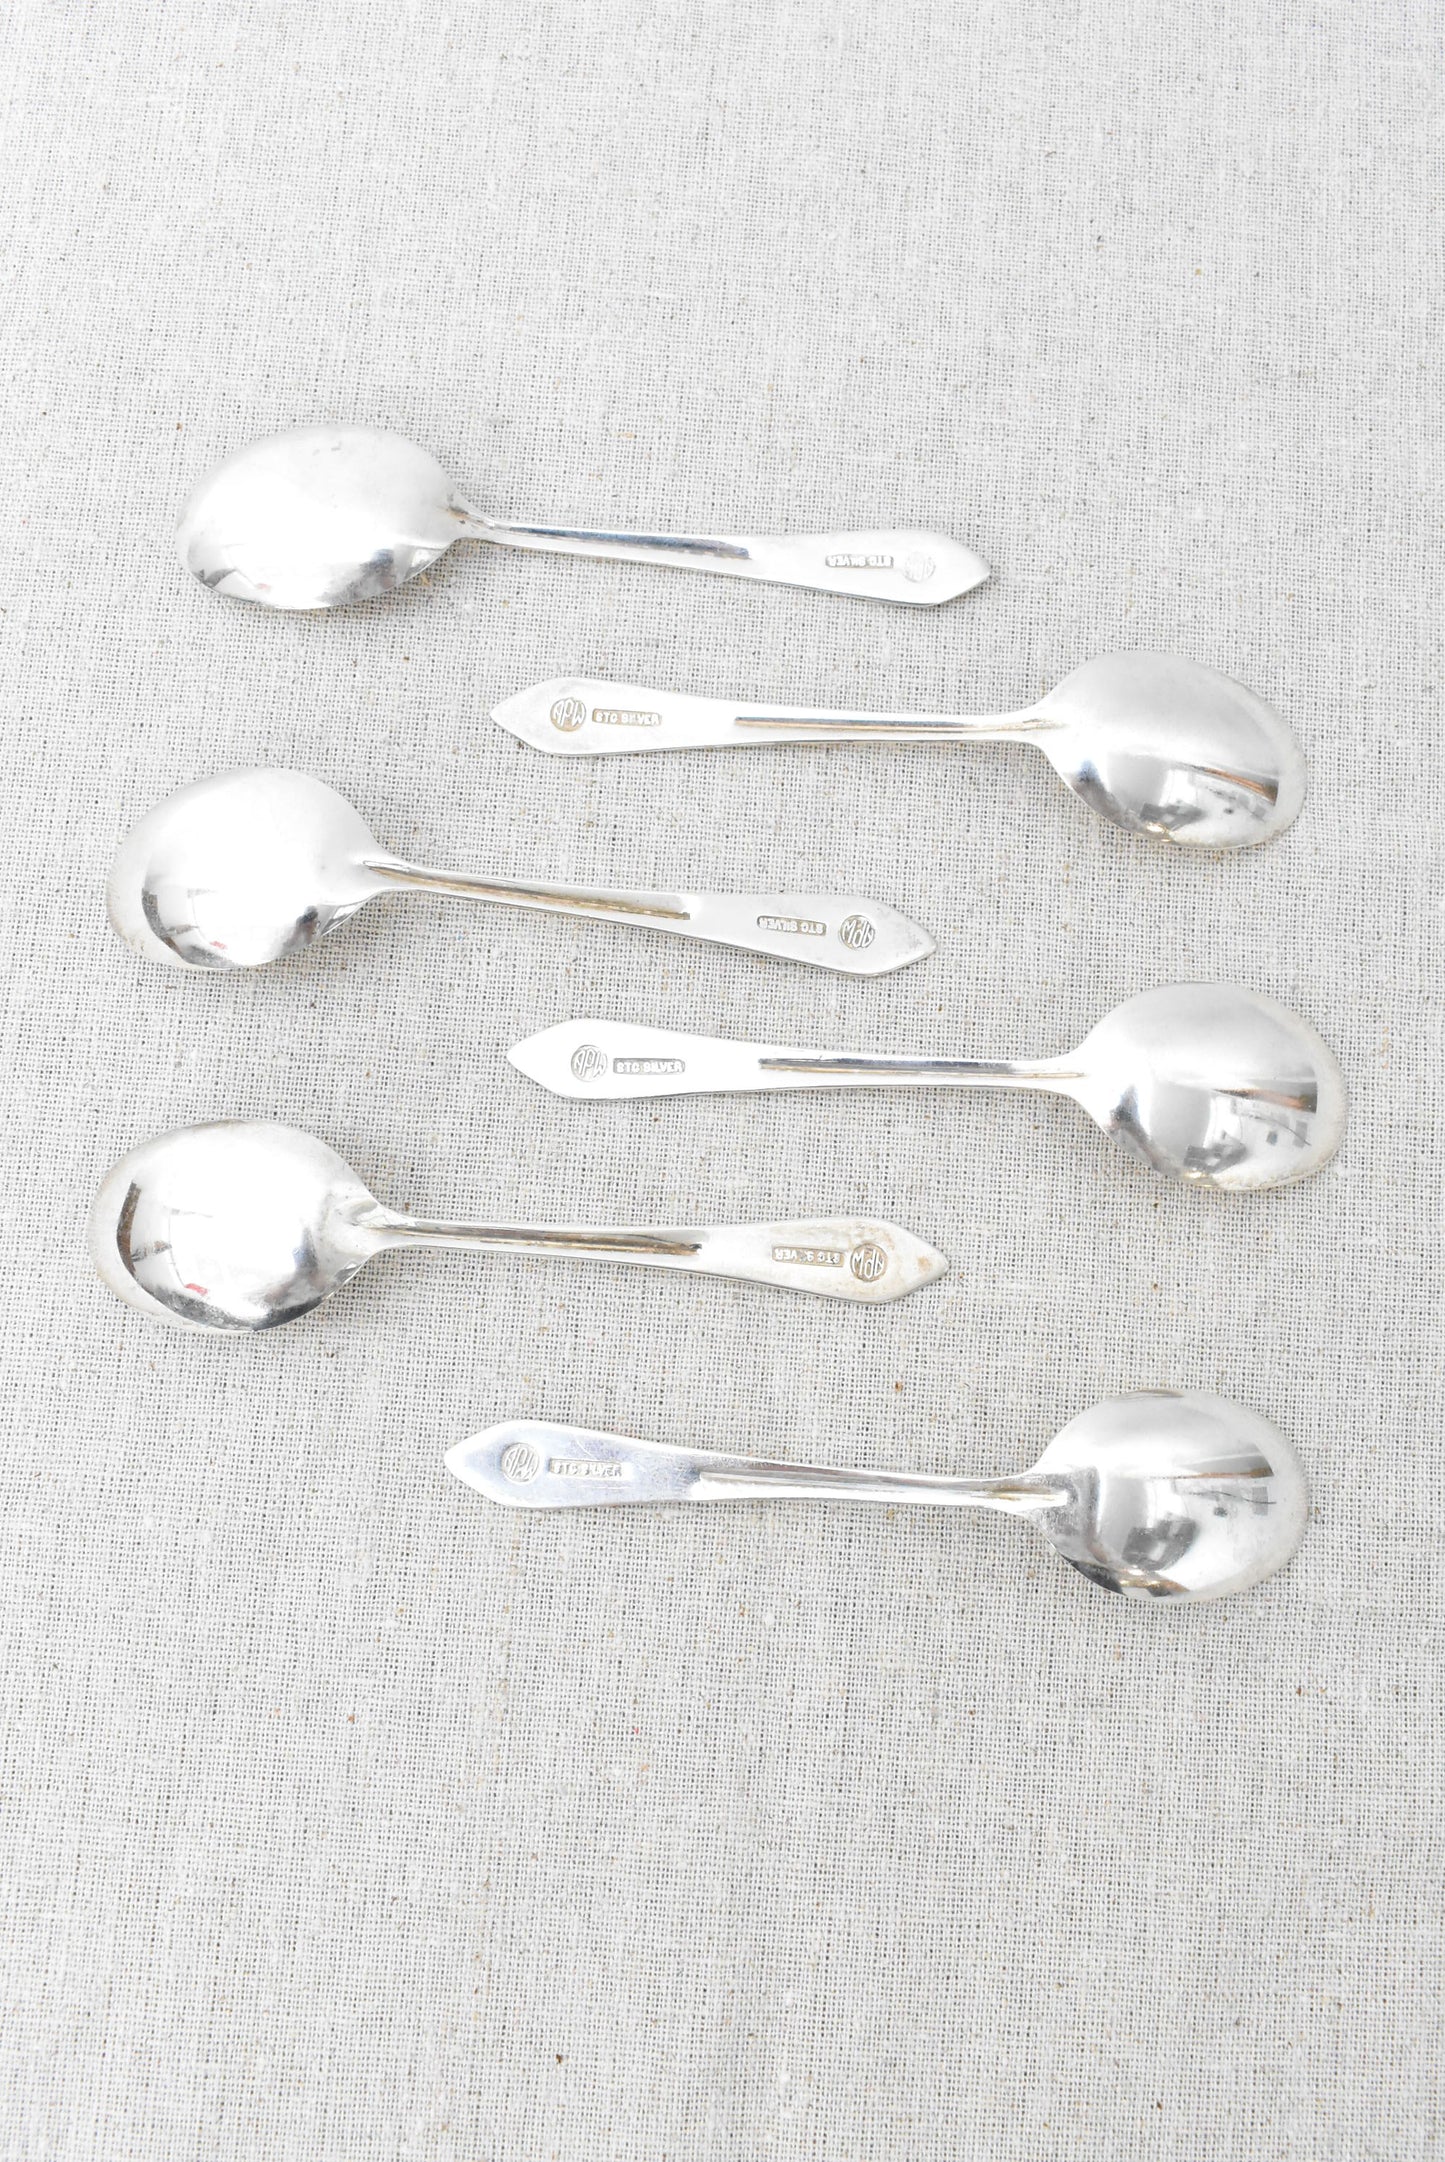 APW sterling silver teaspoon set, Retro